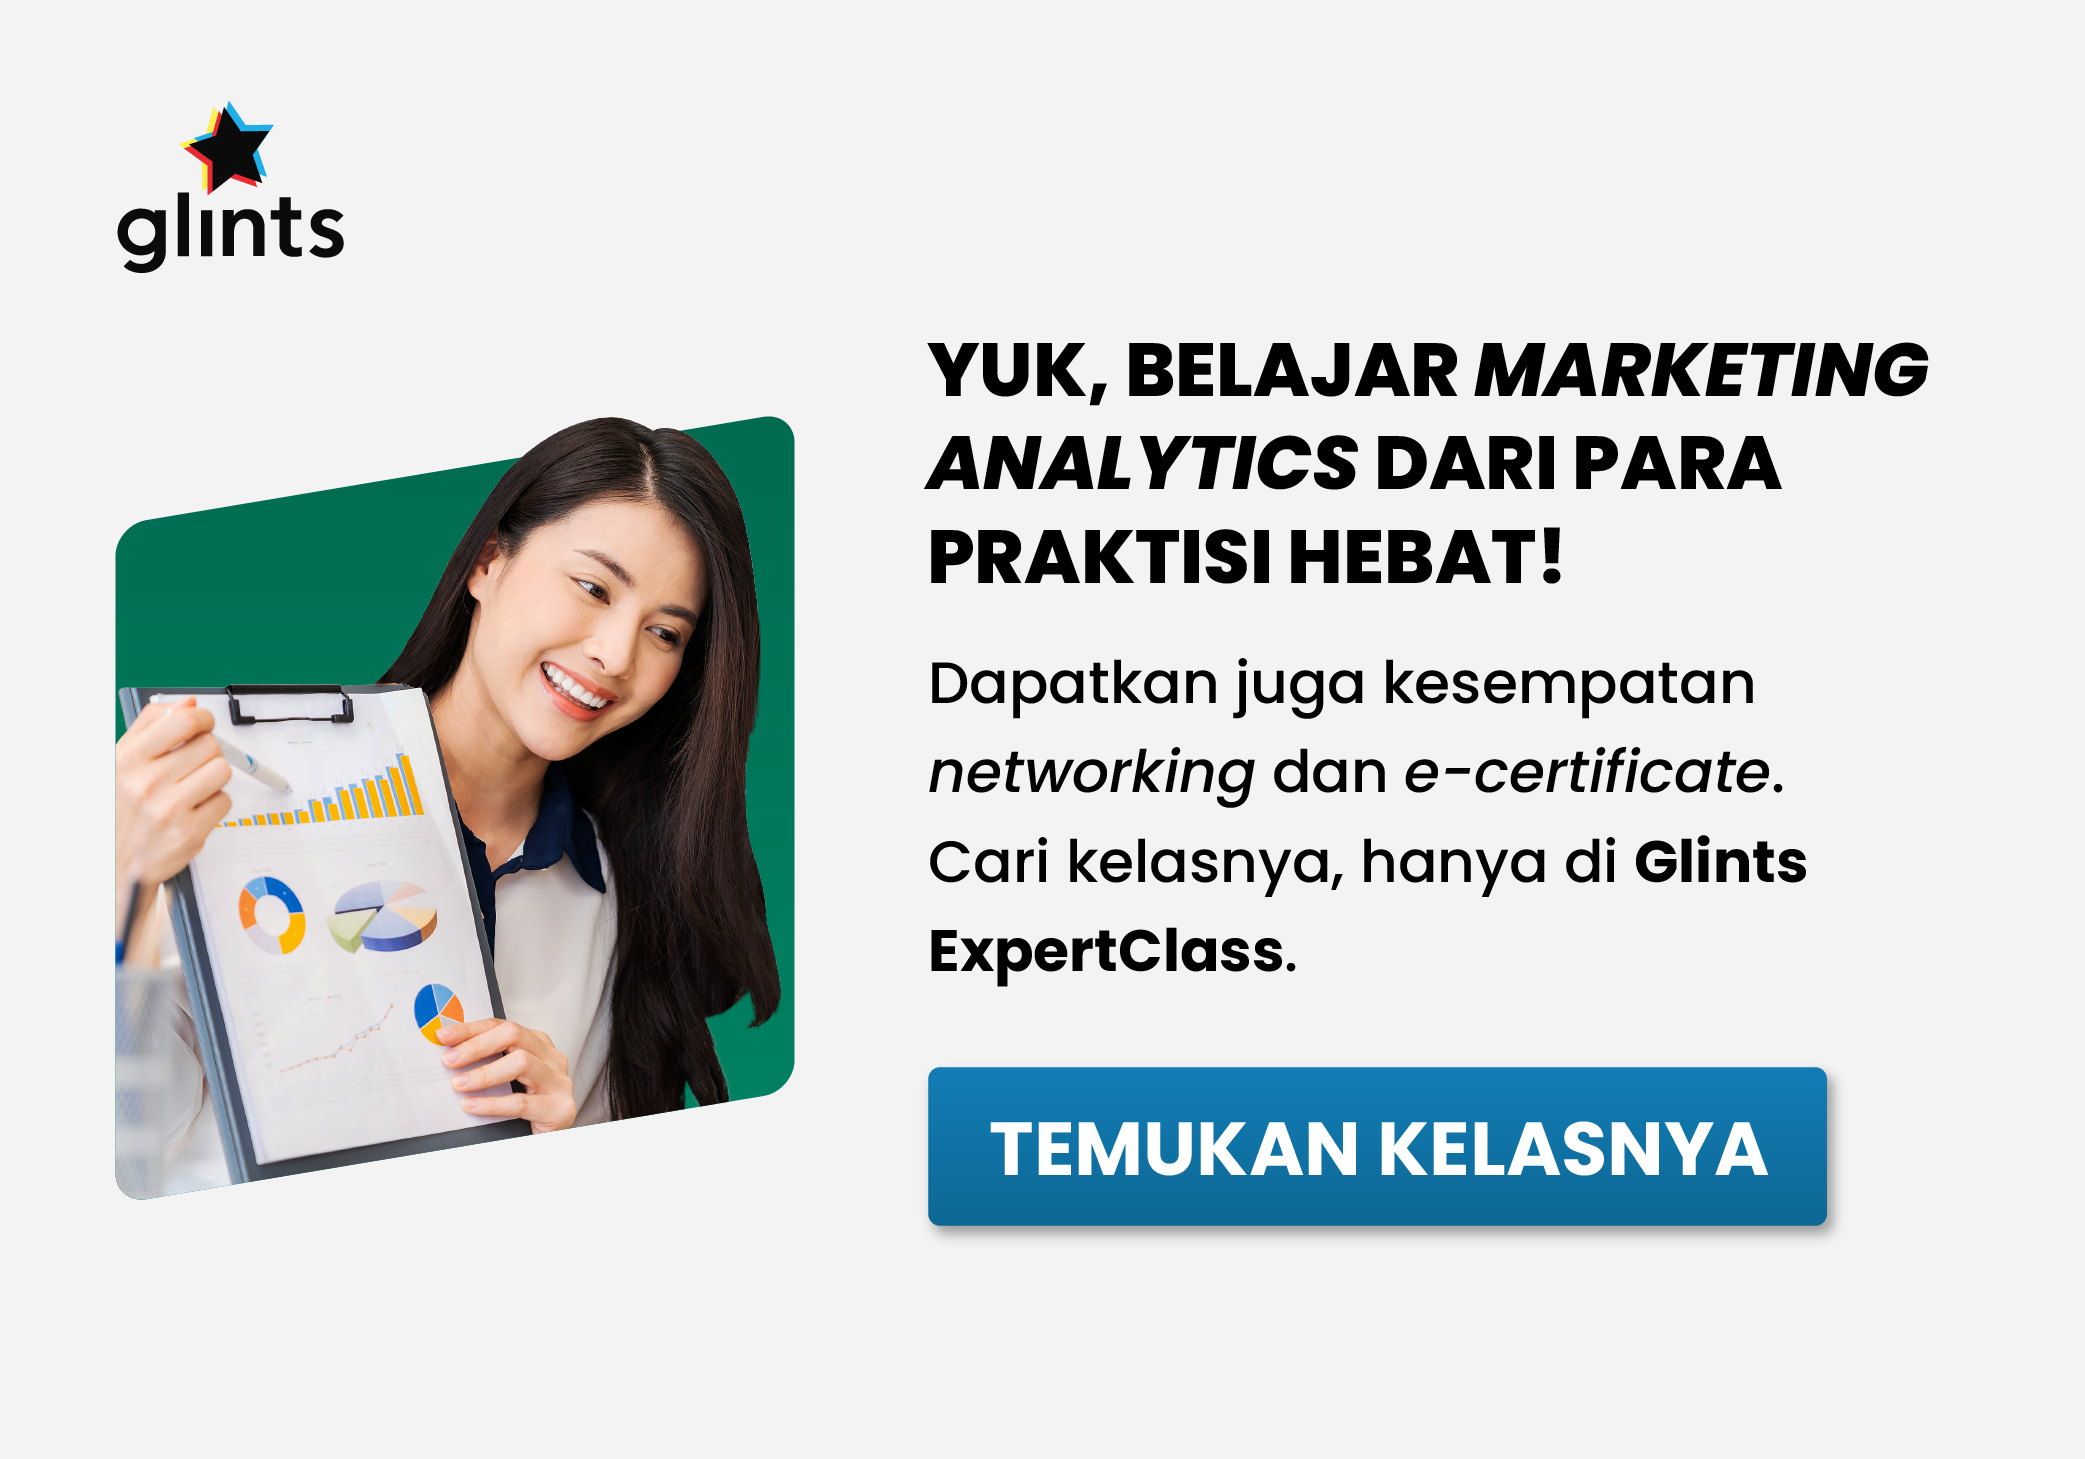 glints expertclass banner - belajar marketing analytics